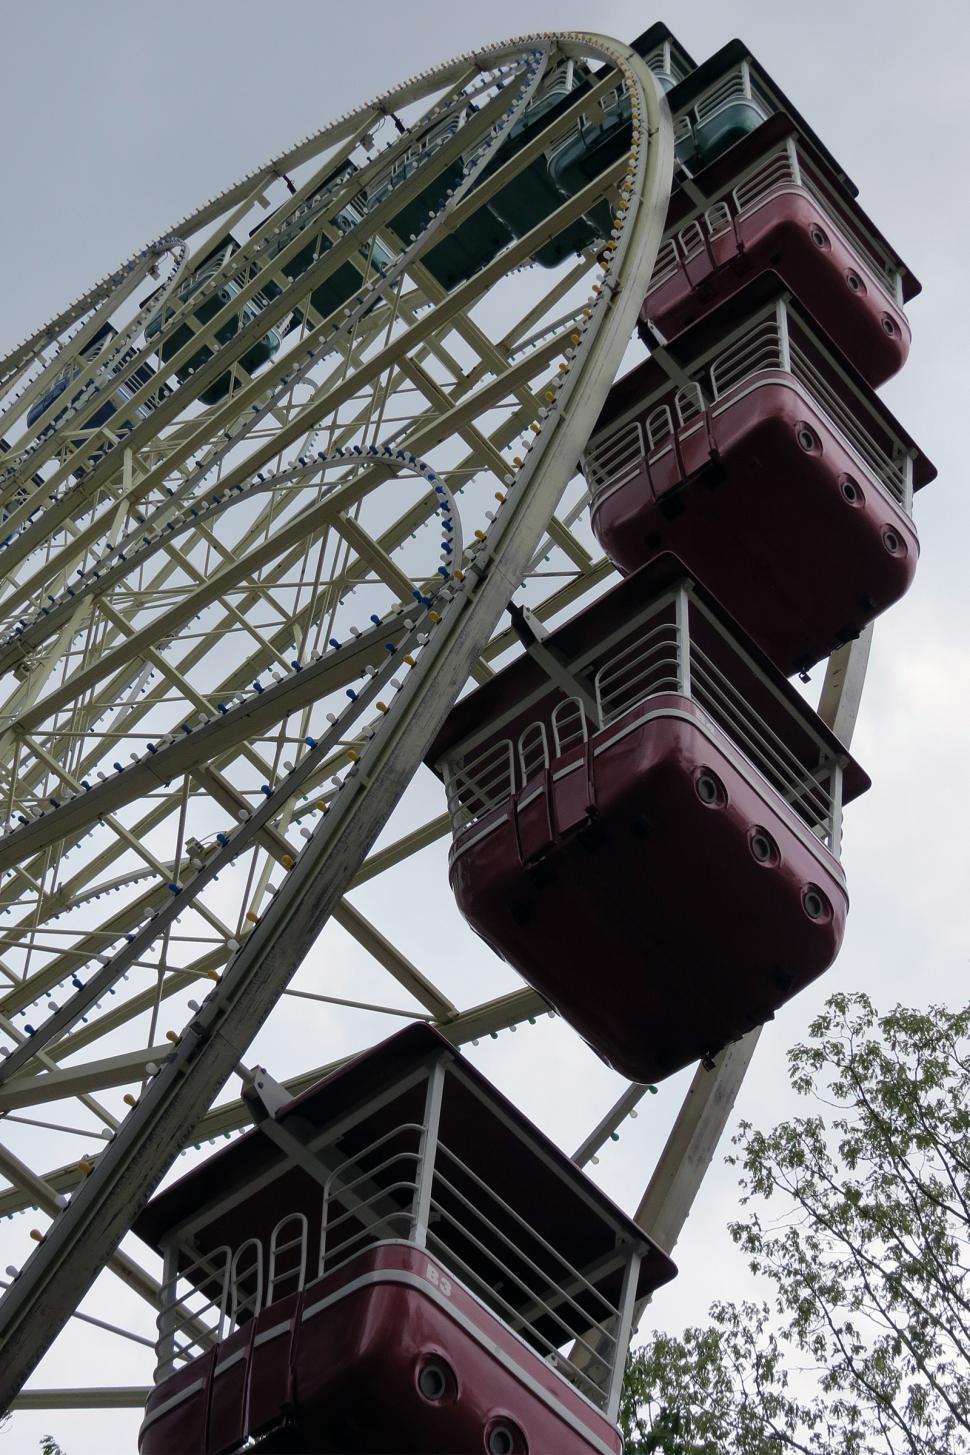 Free Image of Ferris Wheel 